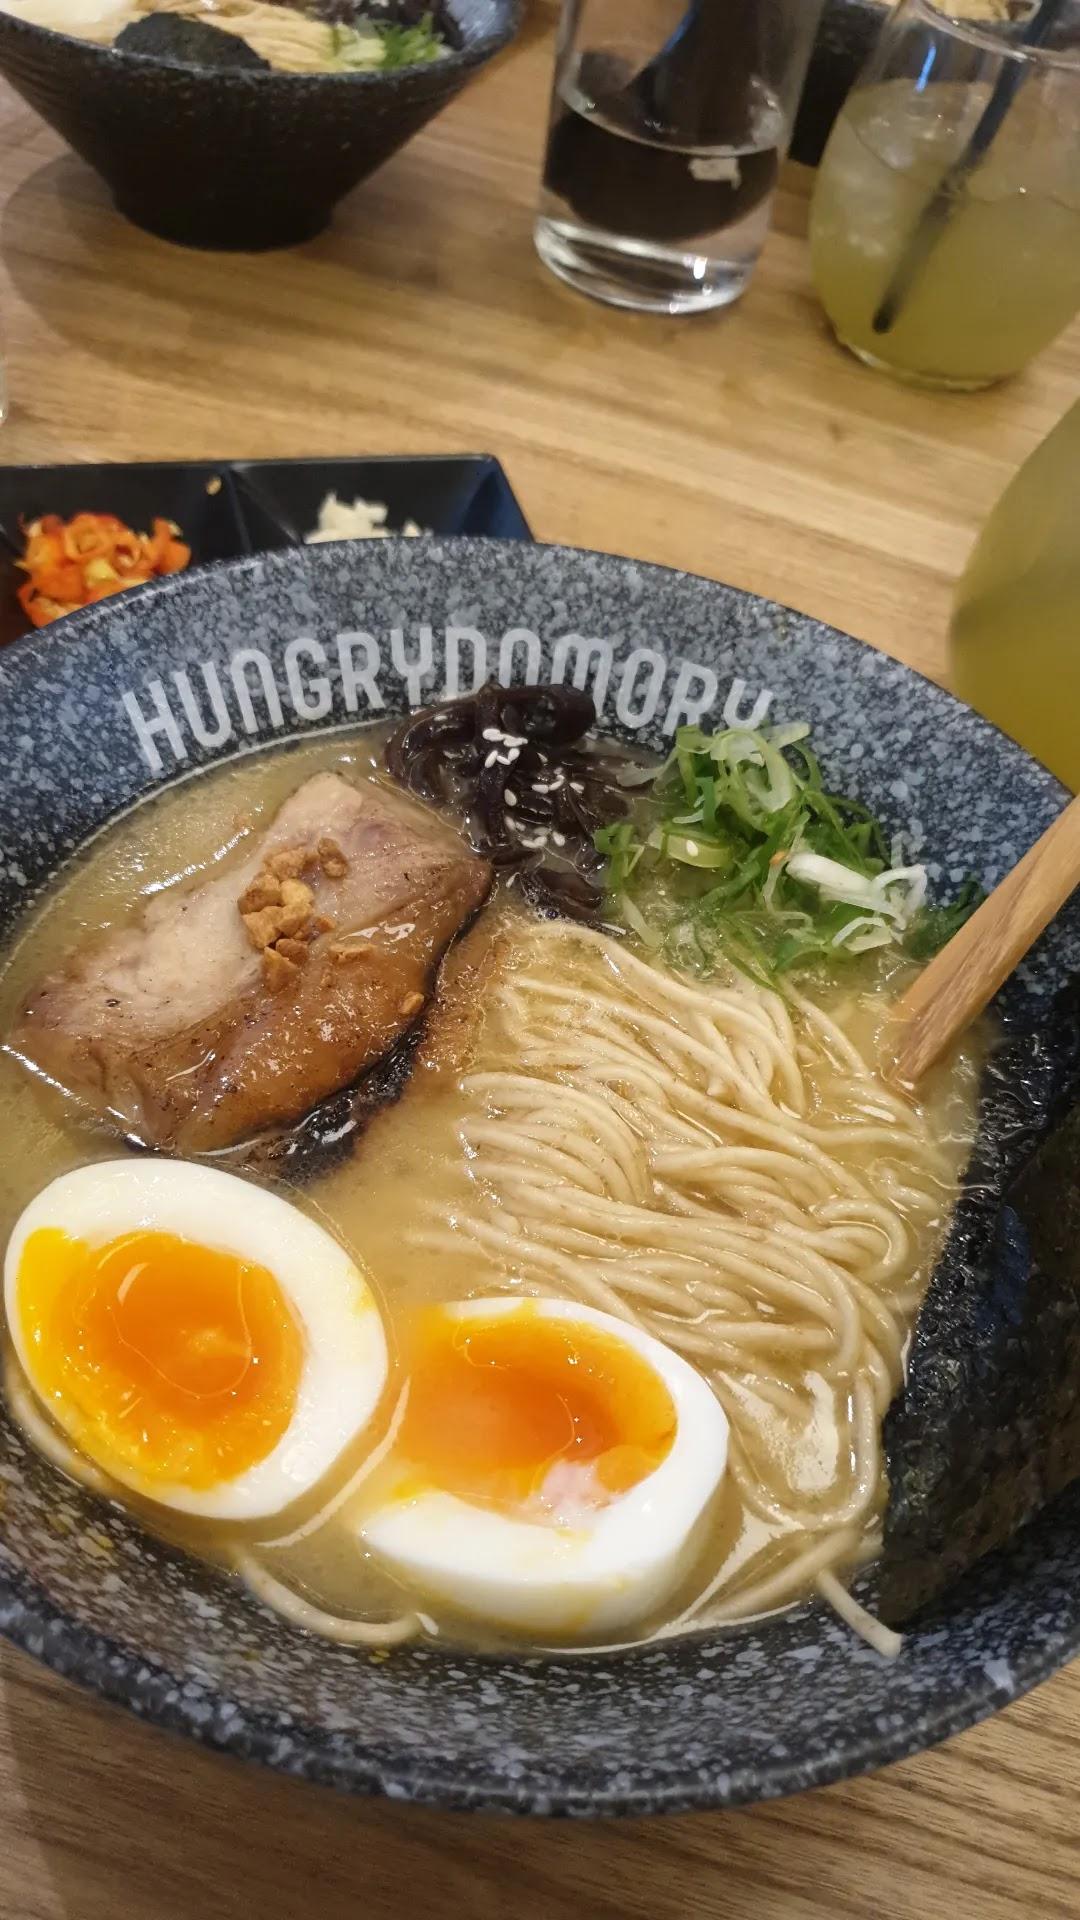 Hungrydomory Bento Udon Ramen - Supermal Karawaci review